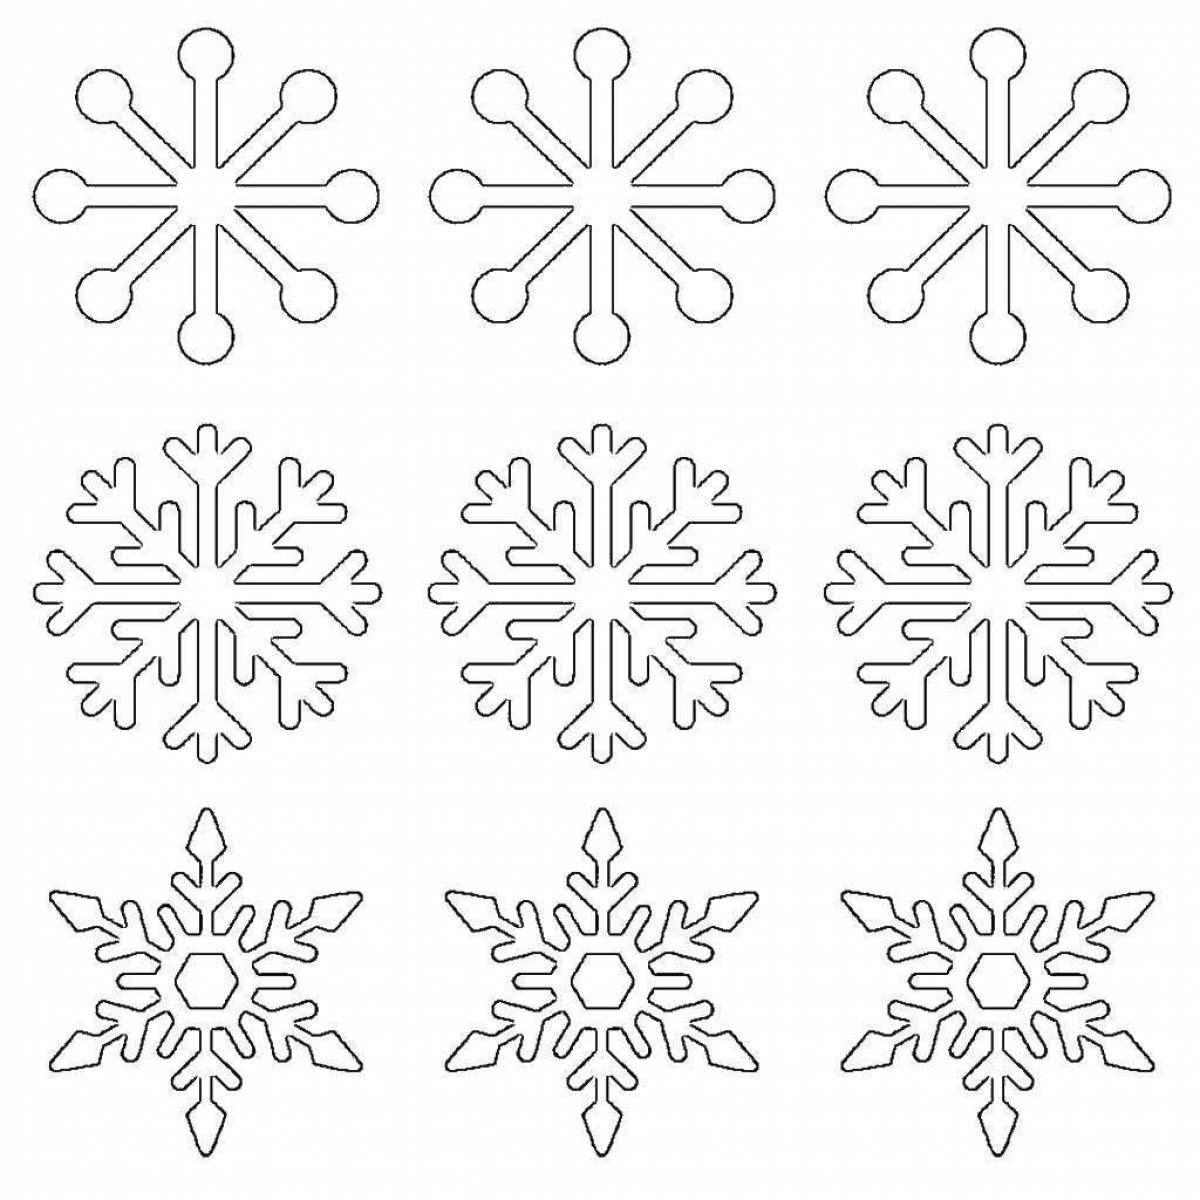 Intricate snowflake coloring